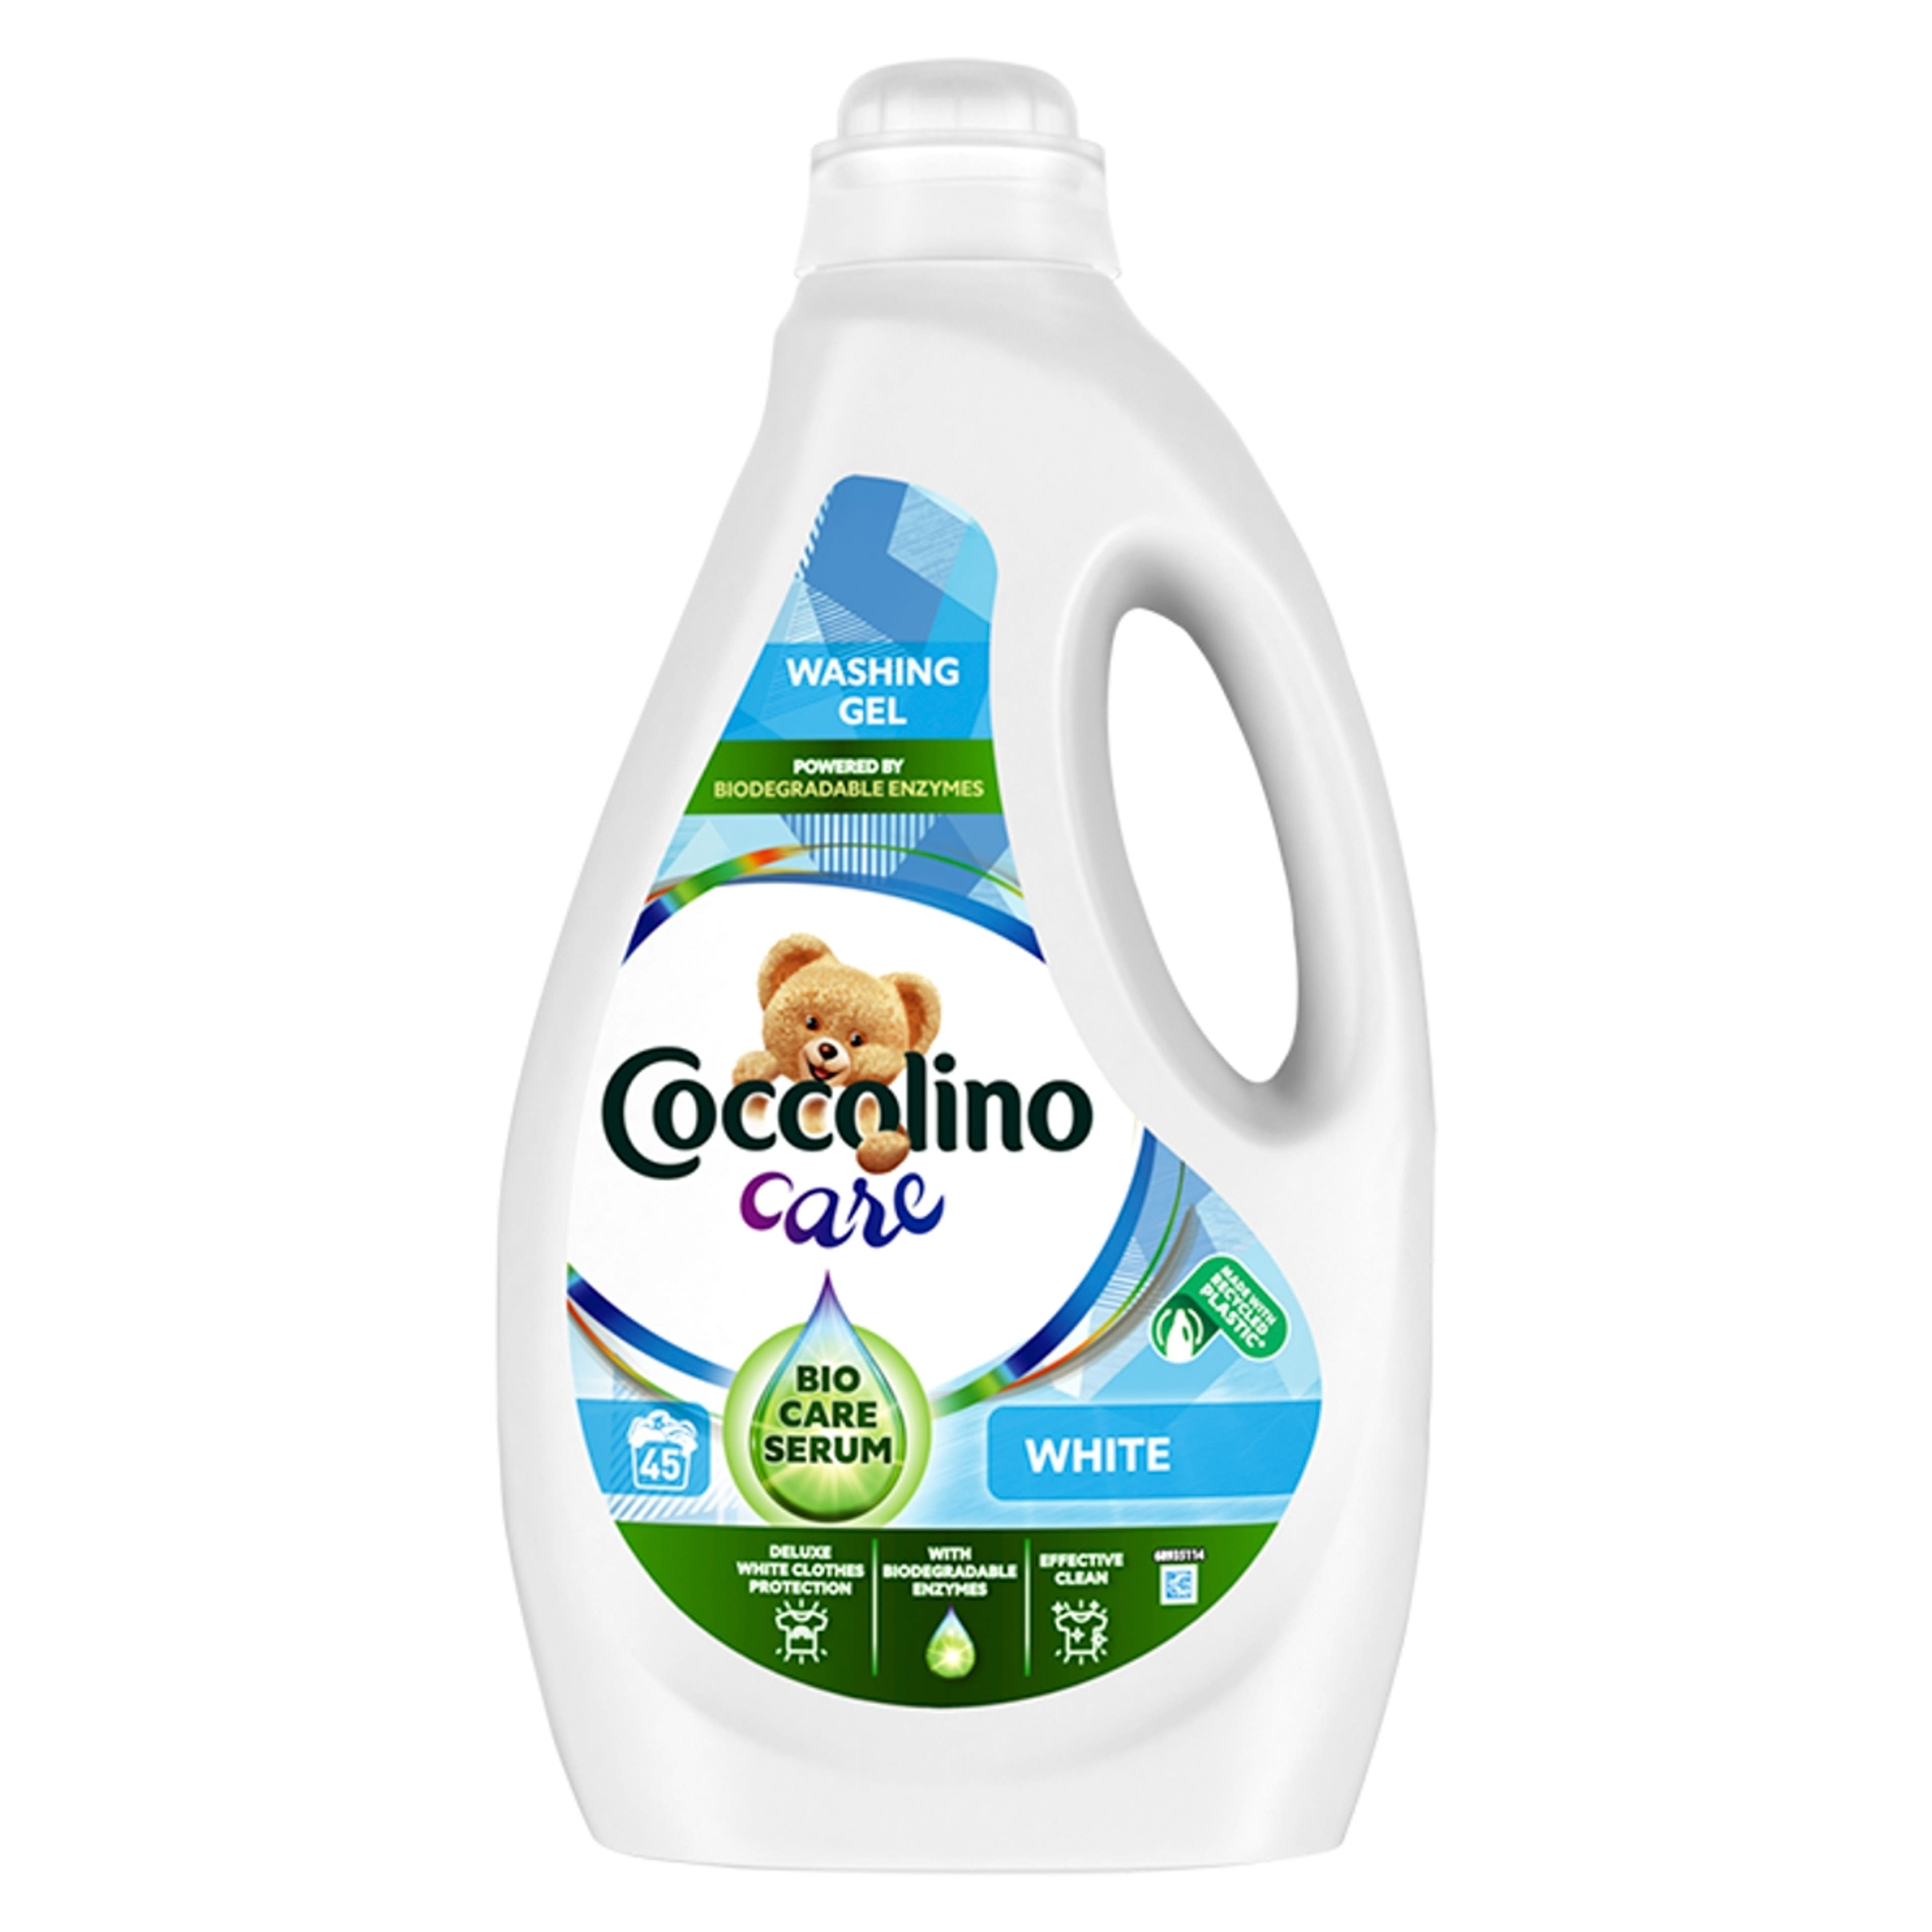 Coccolino Care mosógél fehér ruhákhoz 45 mosás - 1800 ml